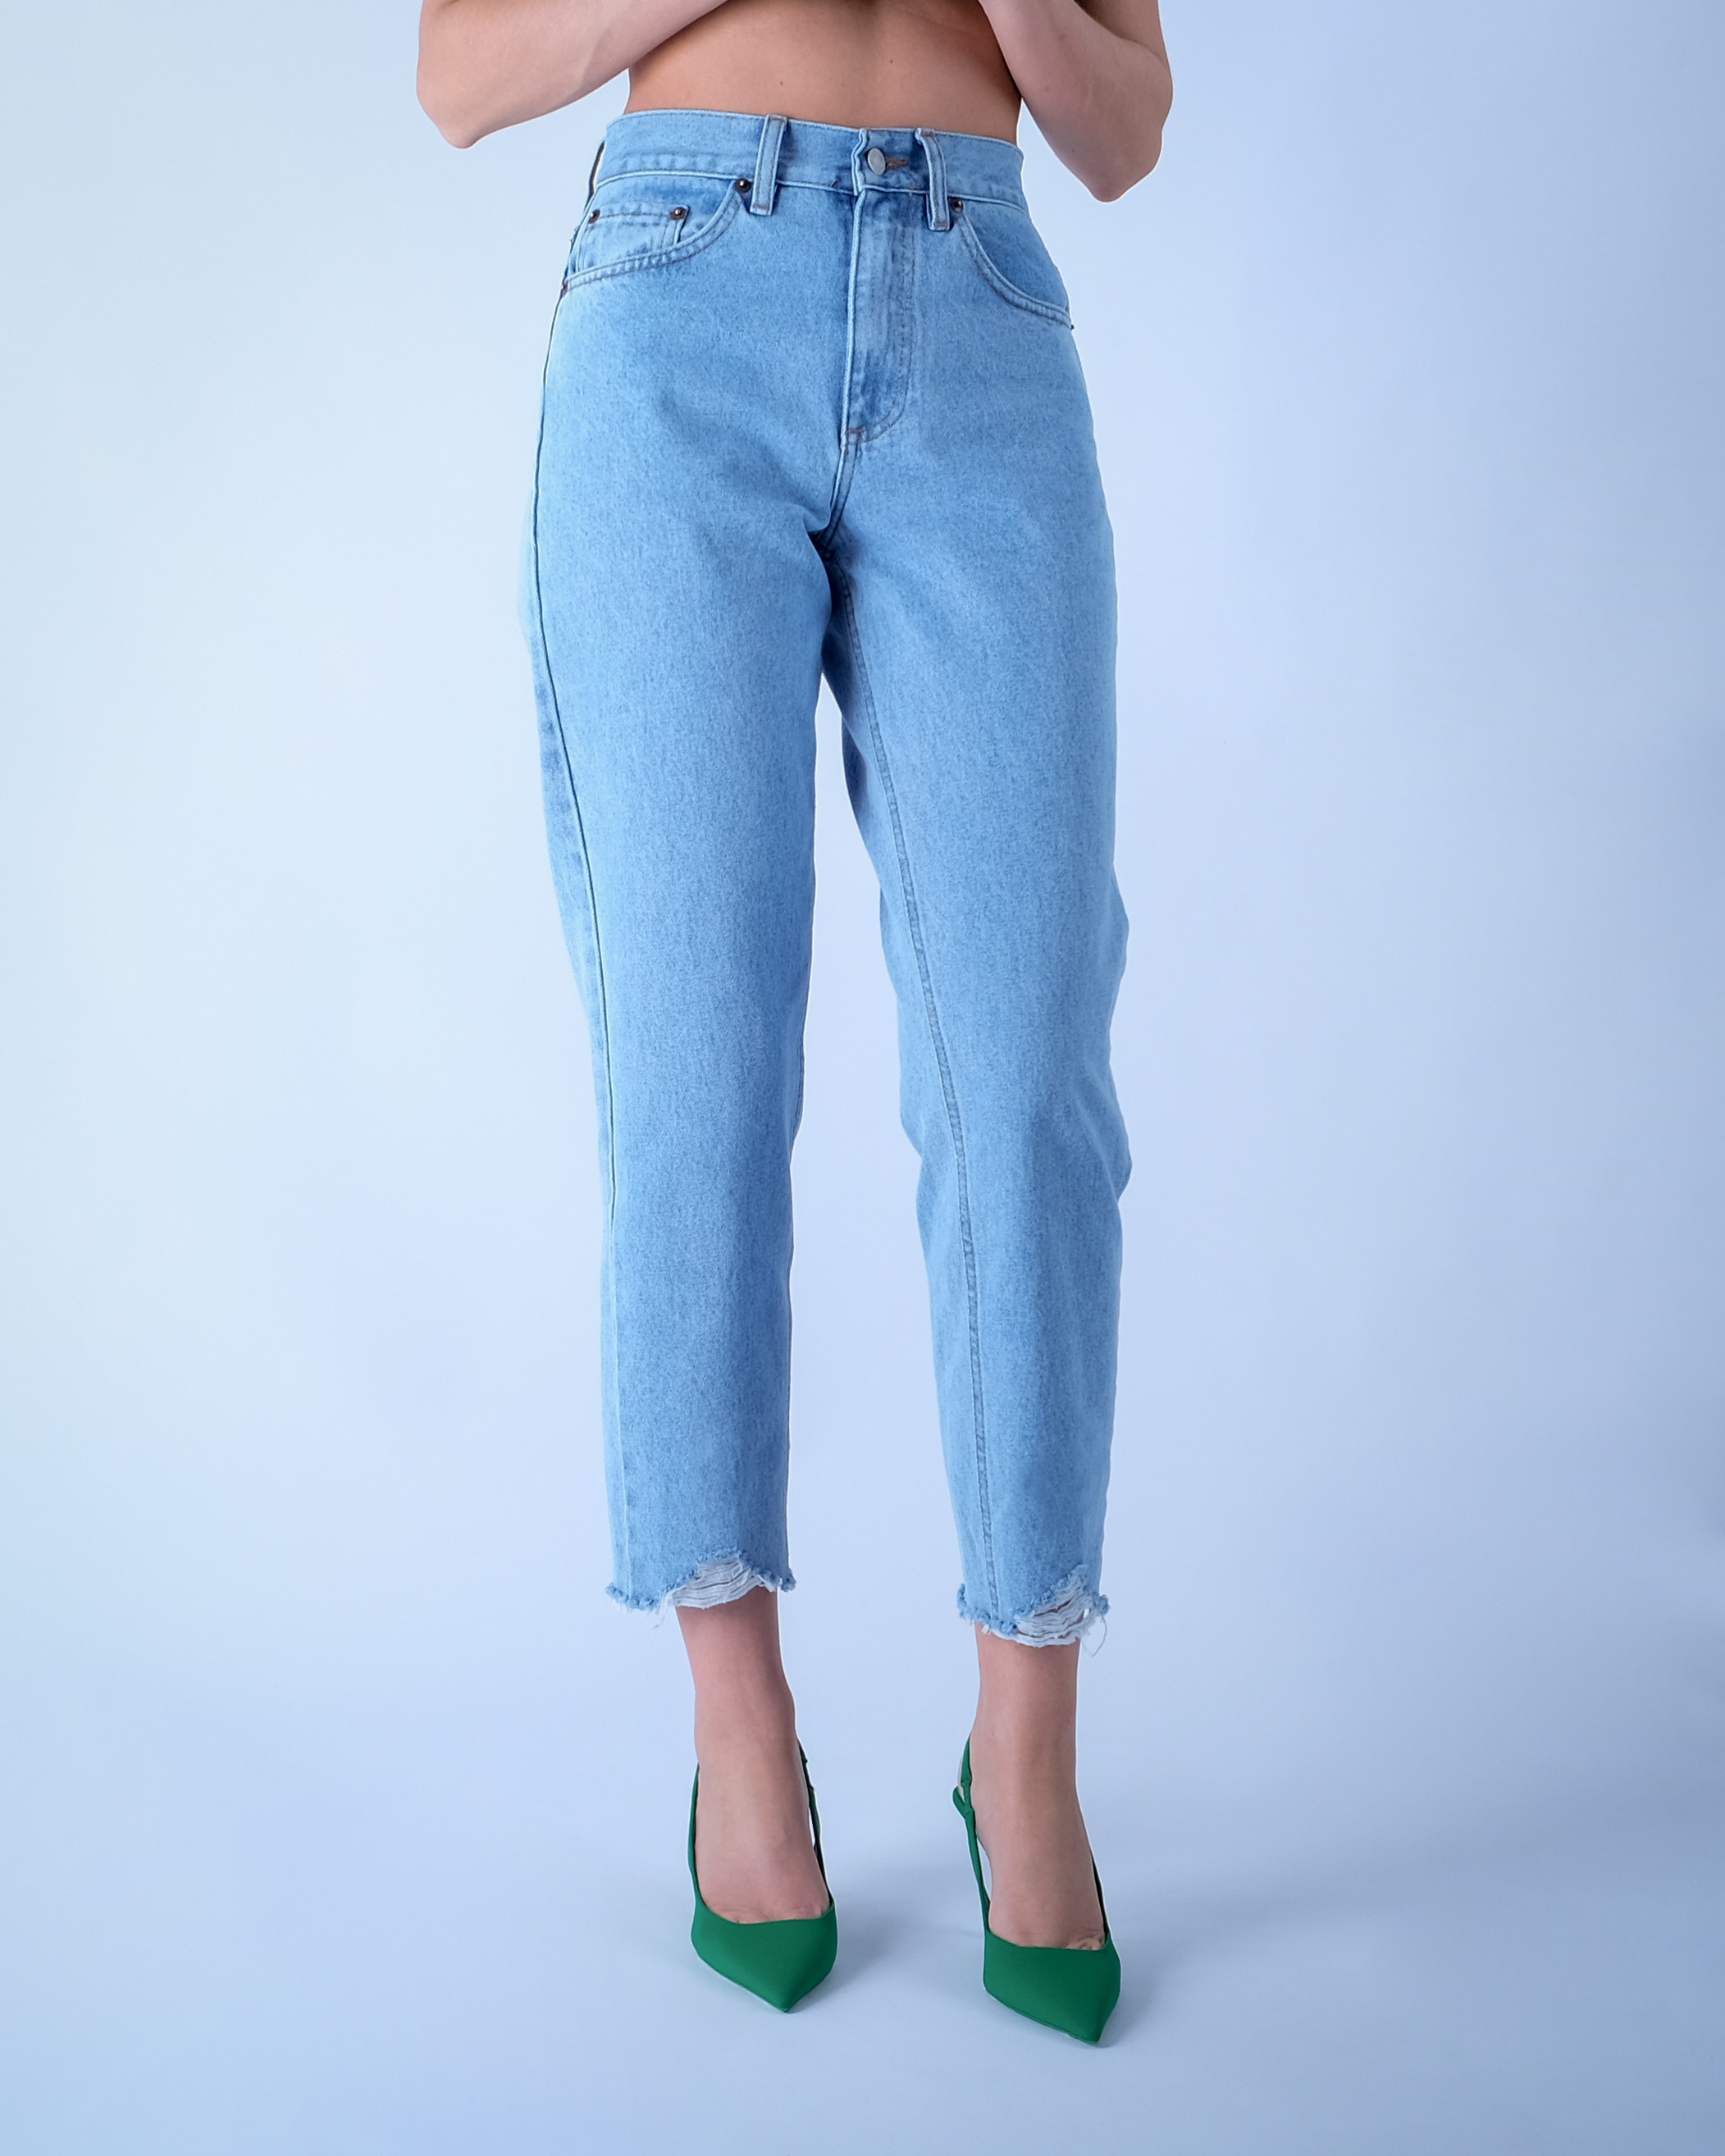 Barbara Light Cropped Jeans - Fashionnoiz